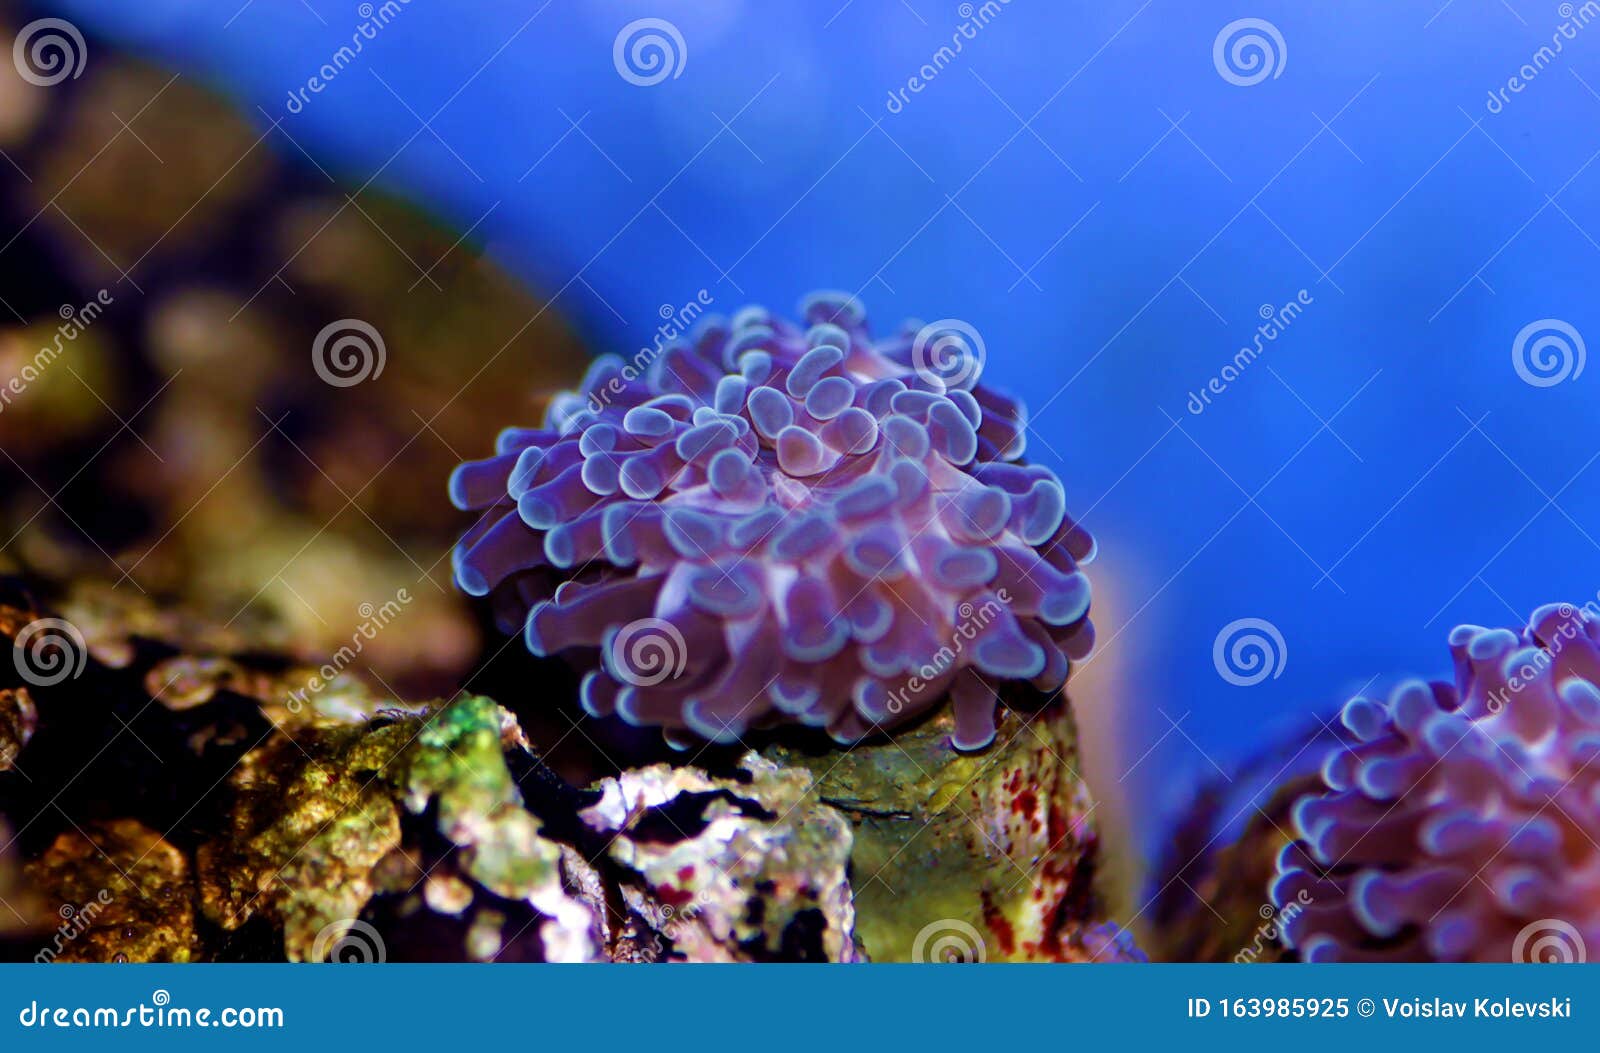 euphyllia hammer lps coral - euphyllia ancora